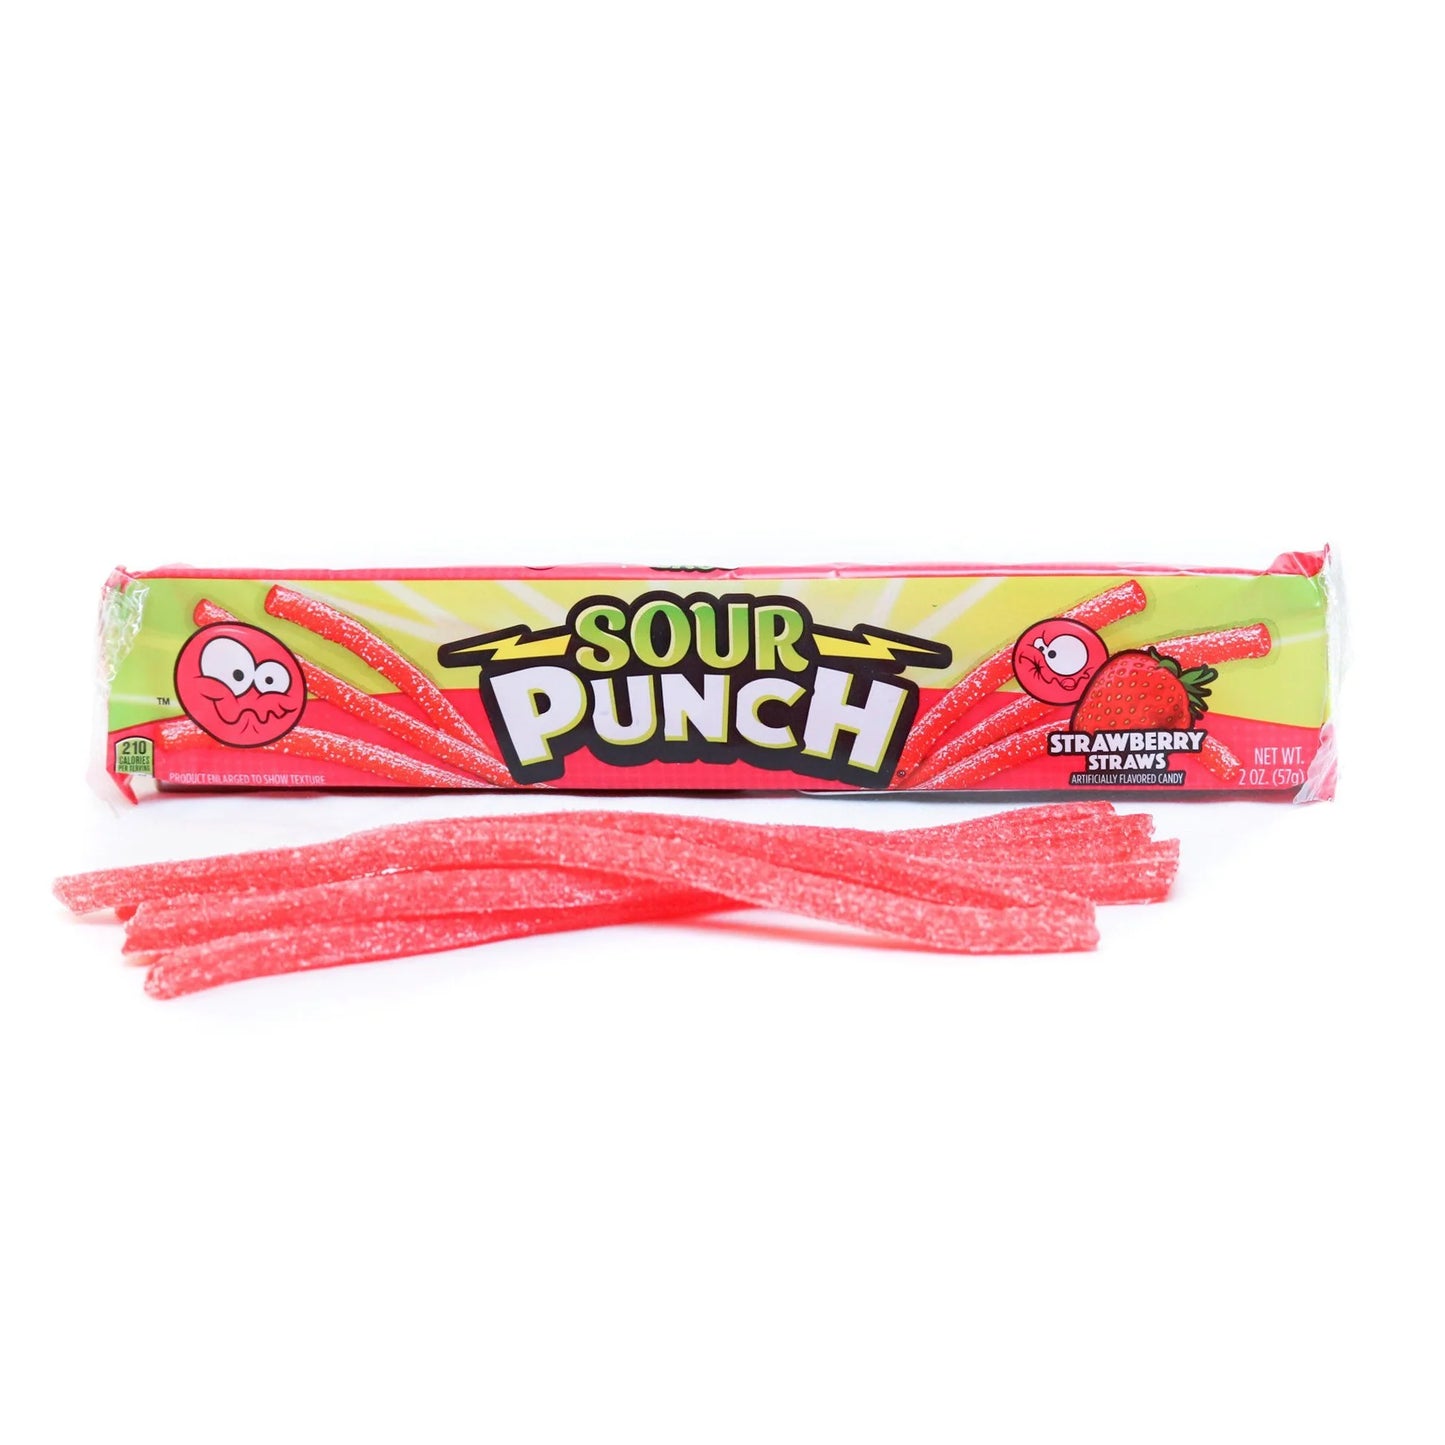 Sour Punch Strawberry Straws USA - Caramelle morbide aspre gusto Fragola (57g) candy online halal